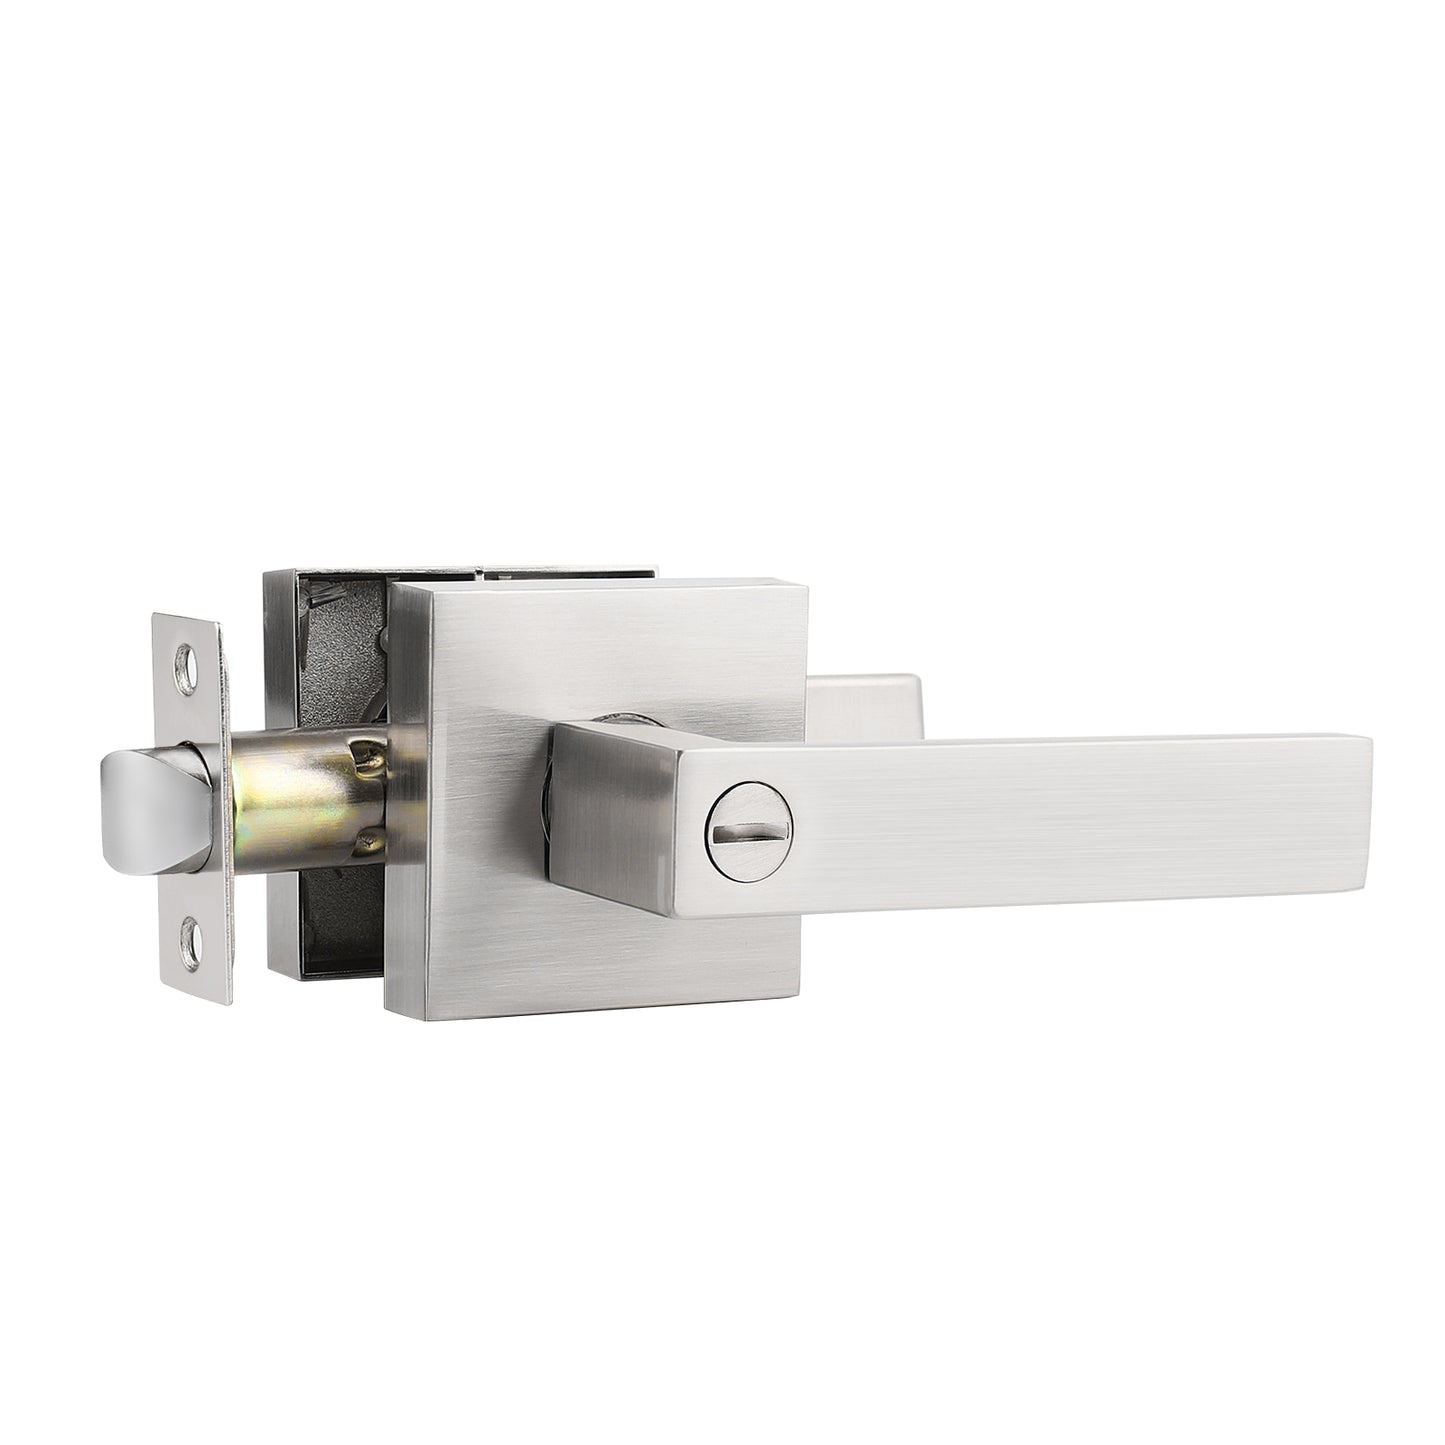 High Quality Heavy Duty Door Levers Satin Nickel Finish Privacy Door Handle Locks for Bedroom Bathroom DL01SNBK - Probrico